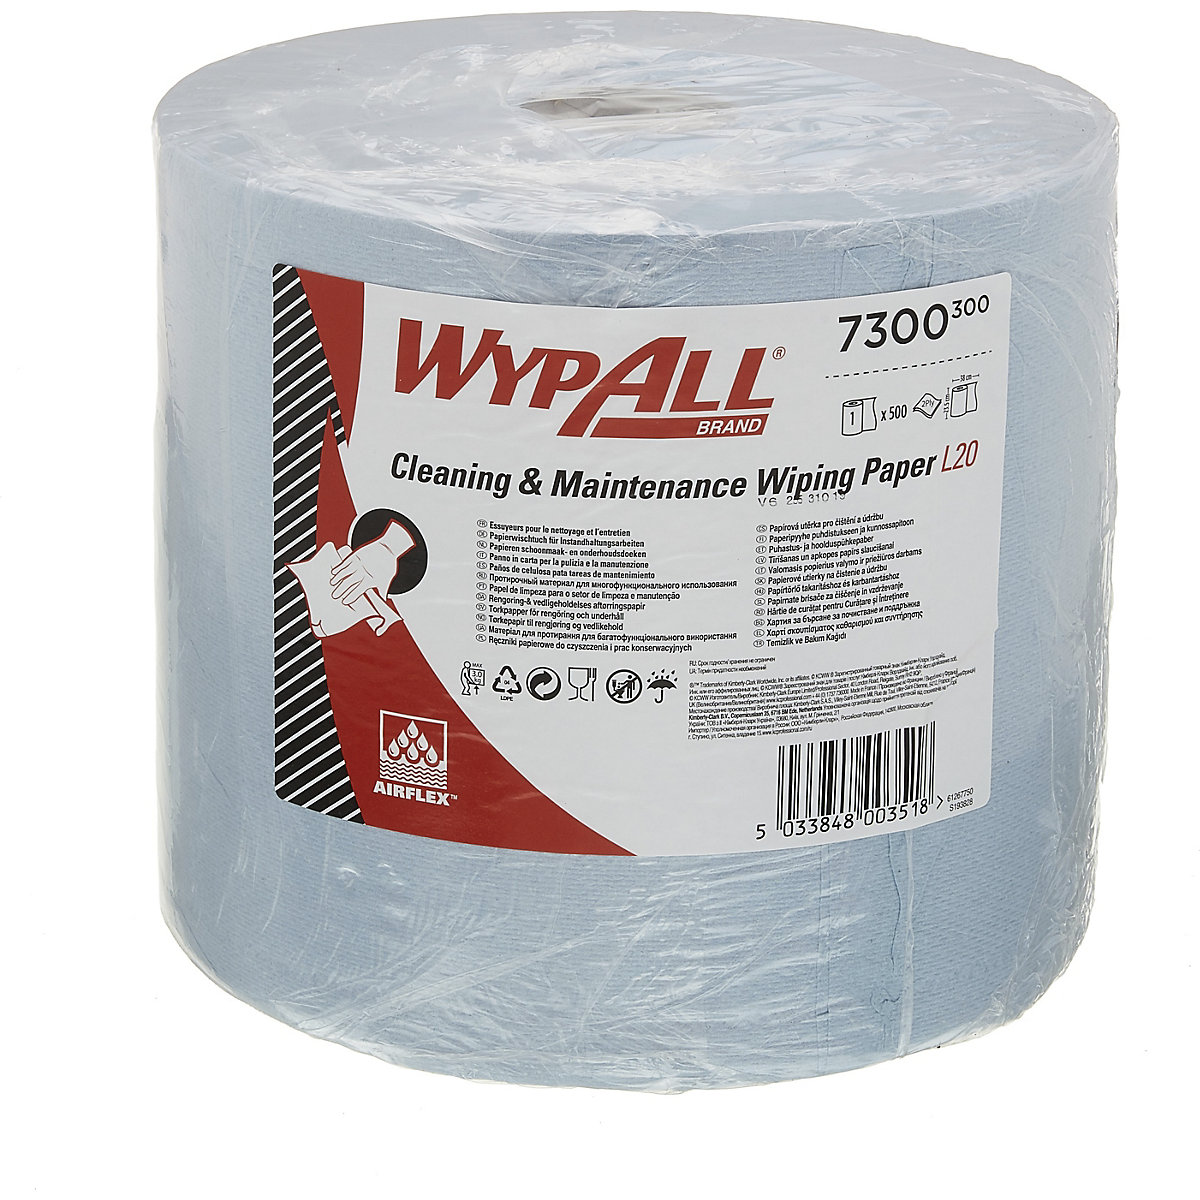 Krpe za brisanje WypAll®, velika rola 7300 – Kimberly-Clark